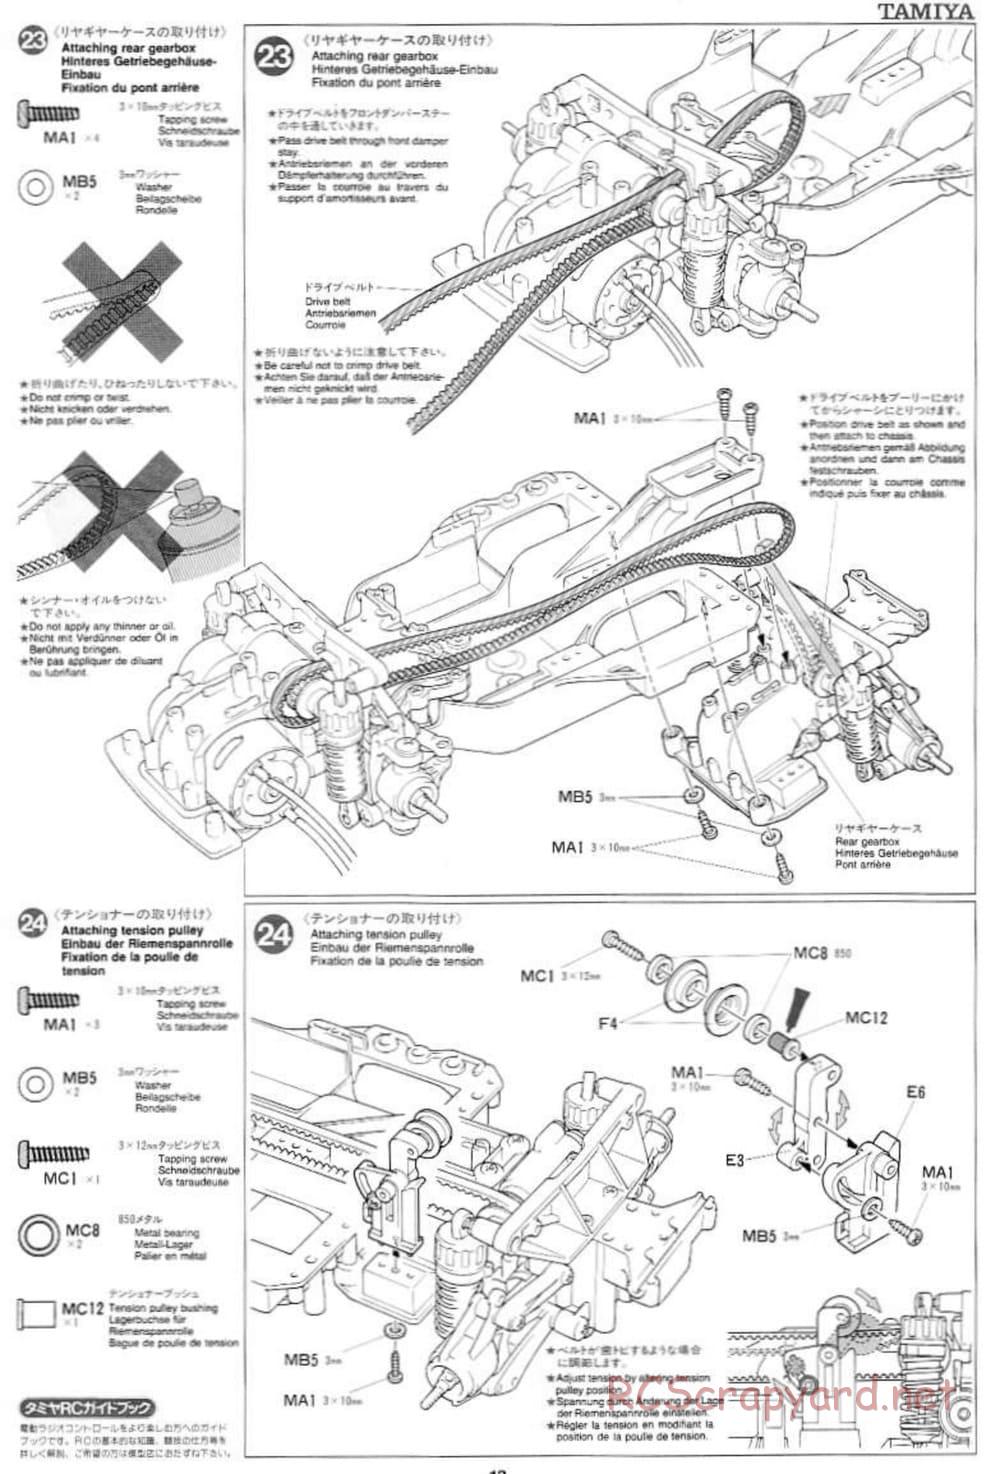 Tamiya - Toyota Corolla WRC - TA-03FS Chassis - Manual - Page 13